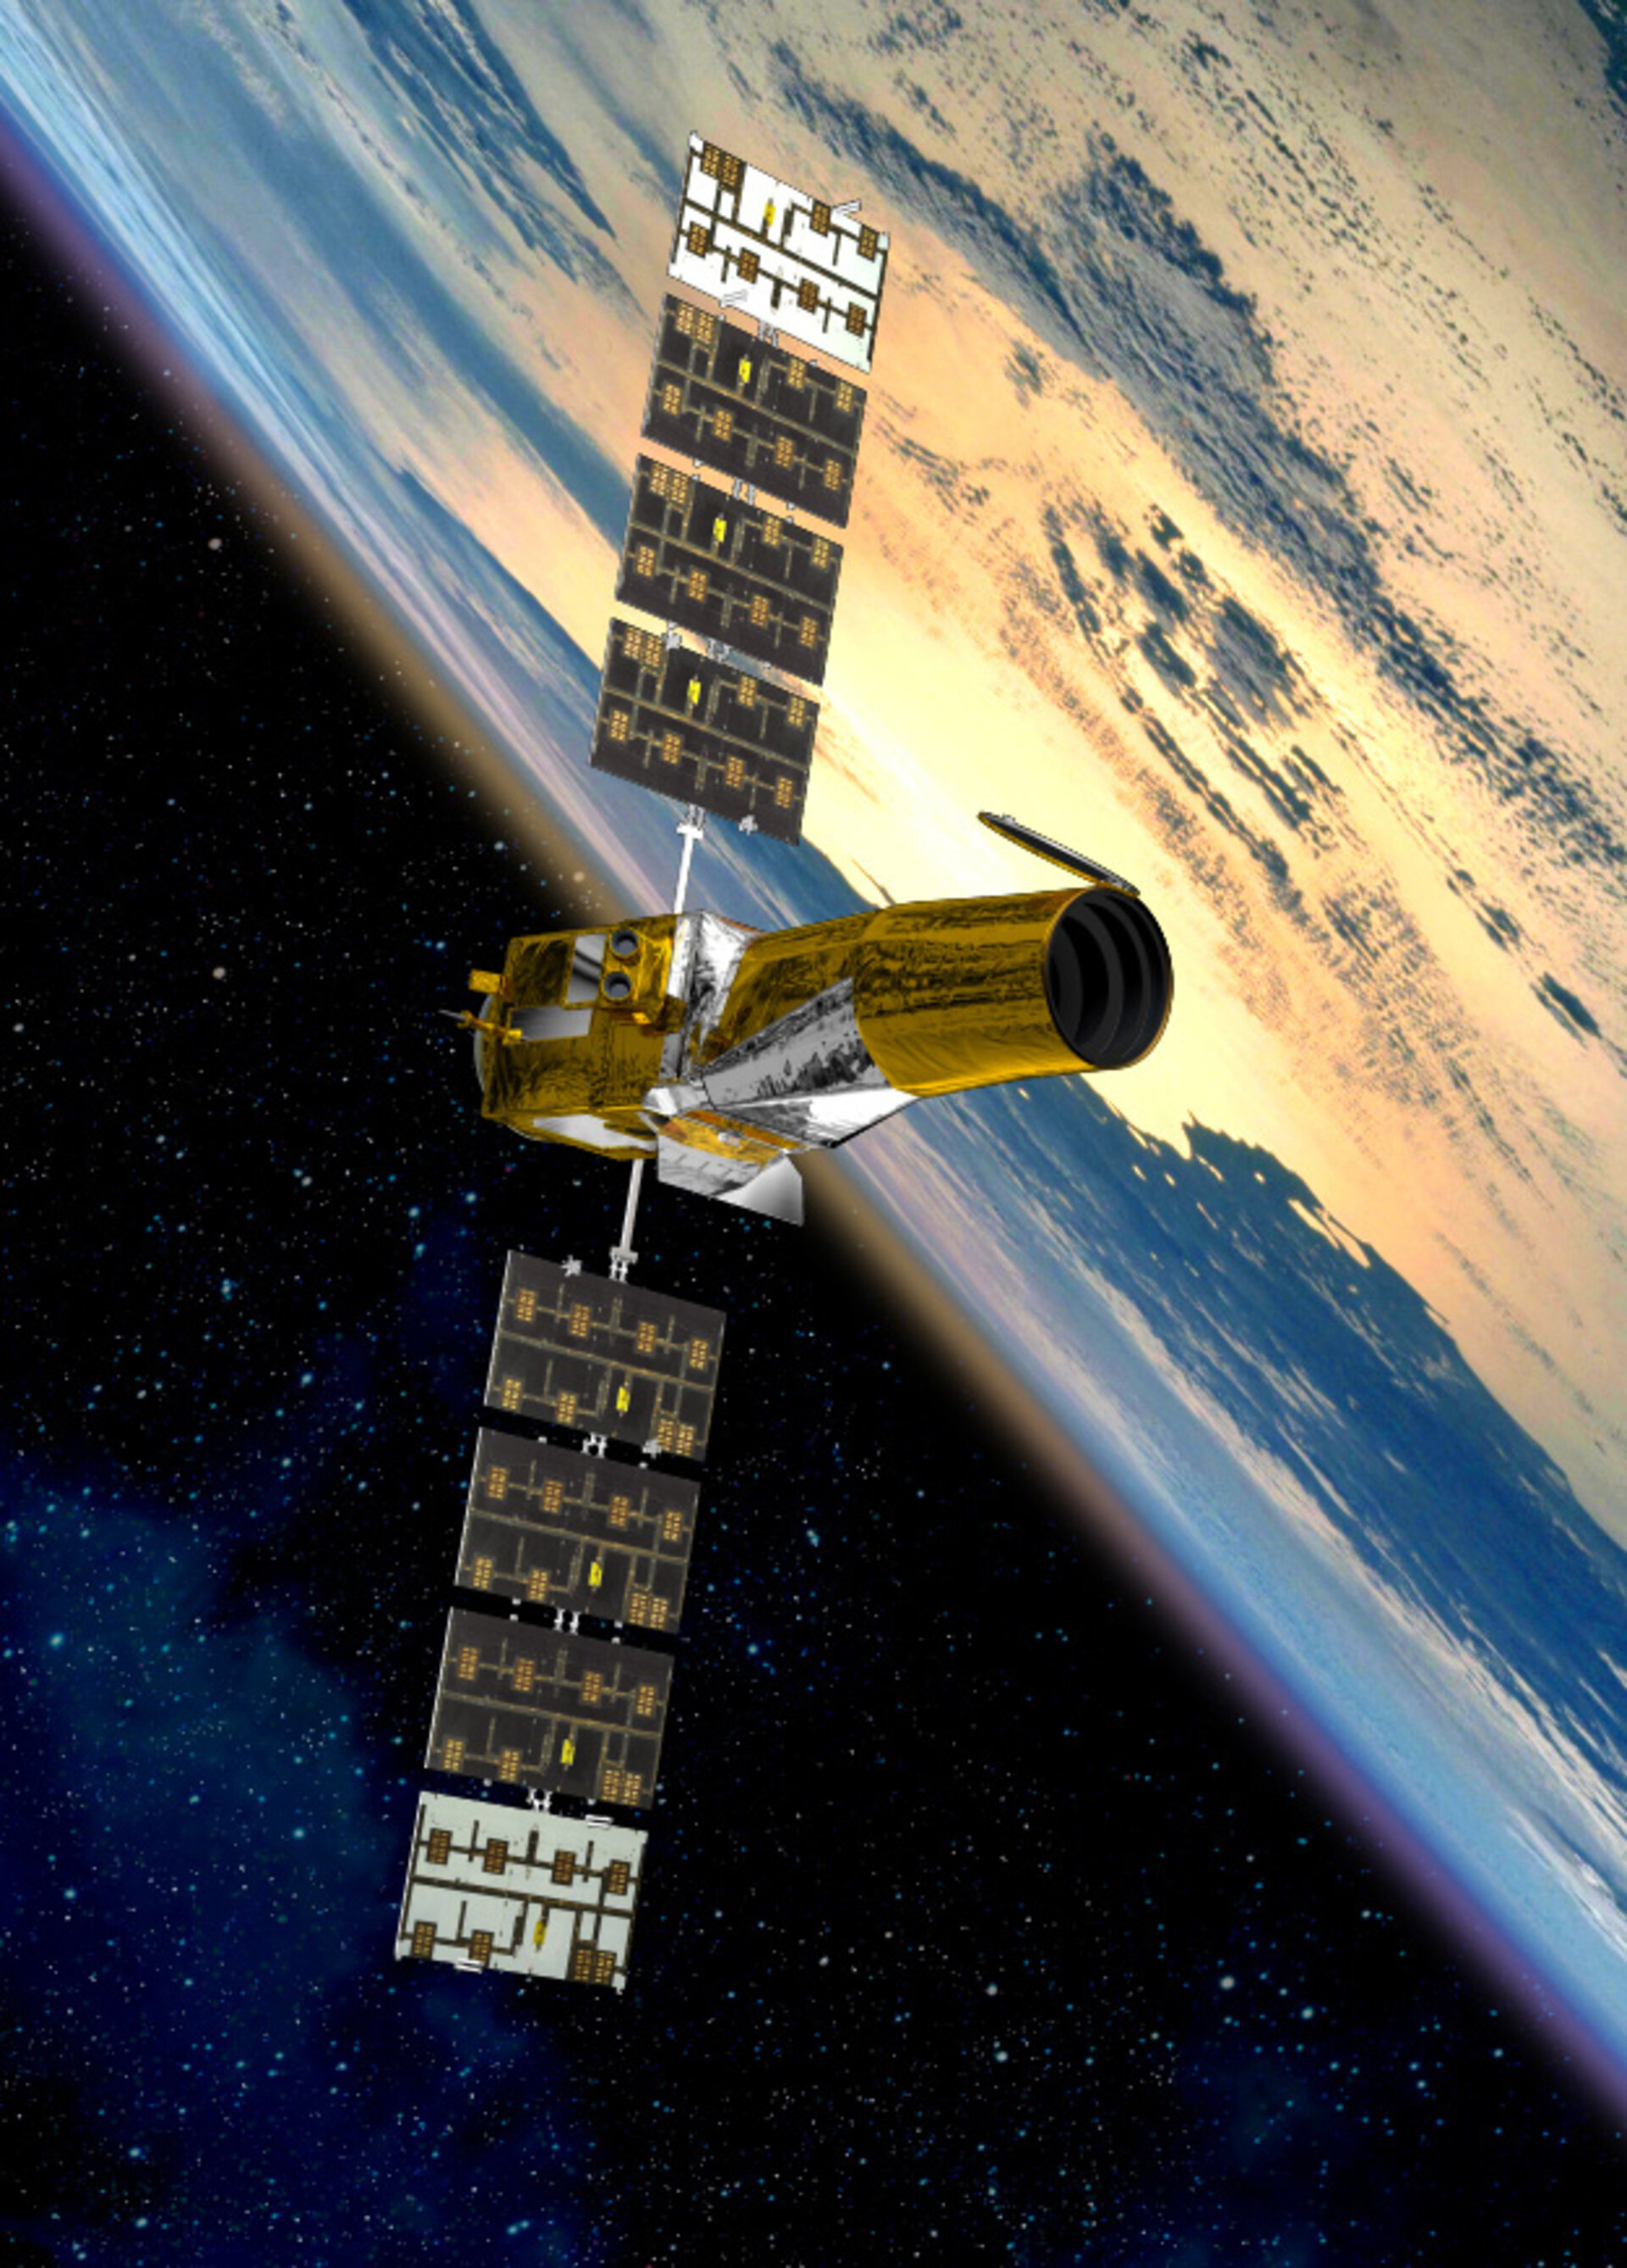 Artist's view of COROT satellite